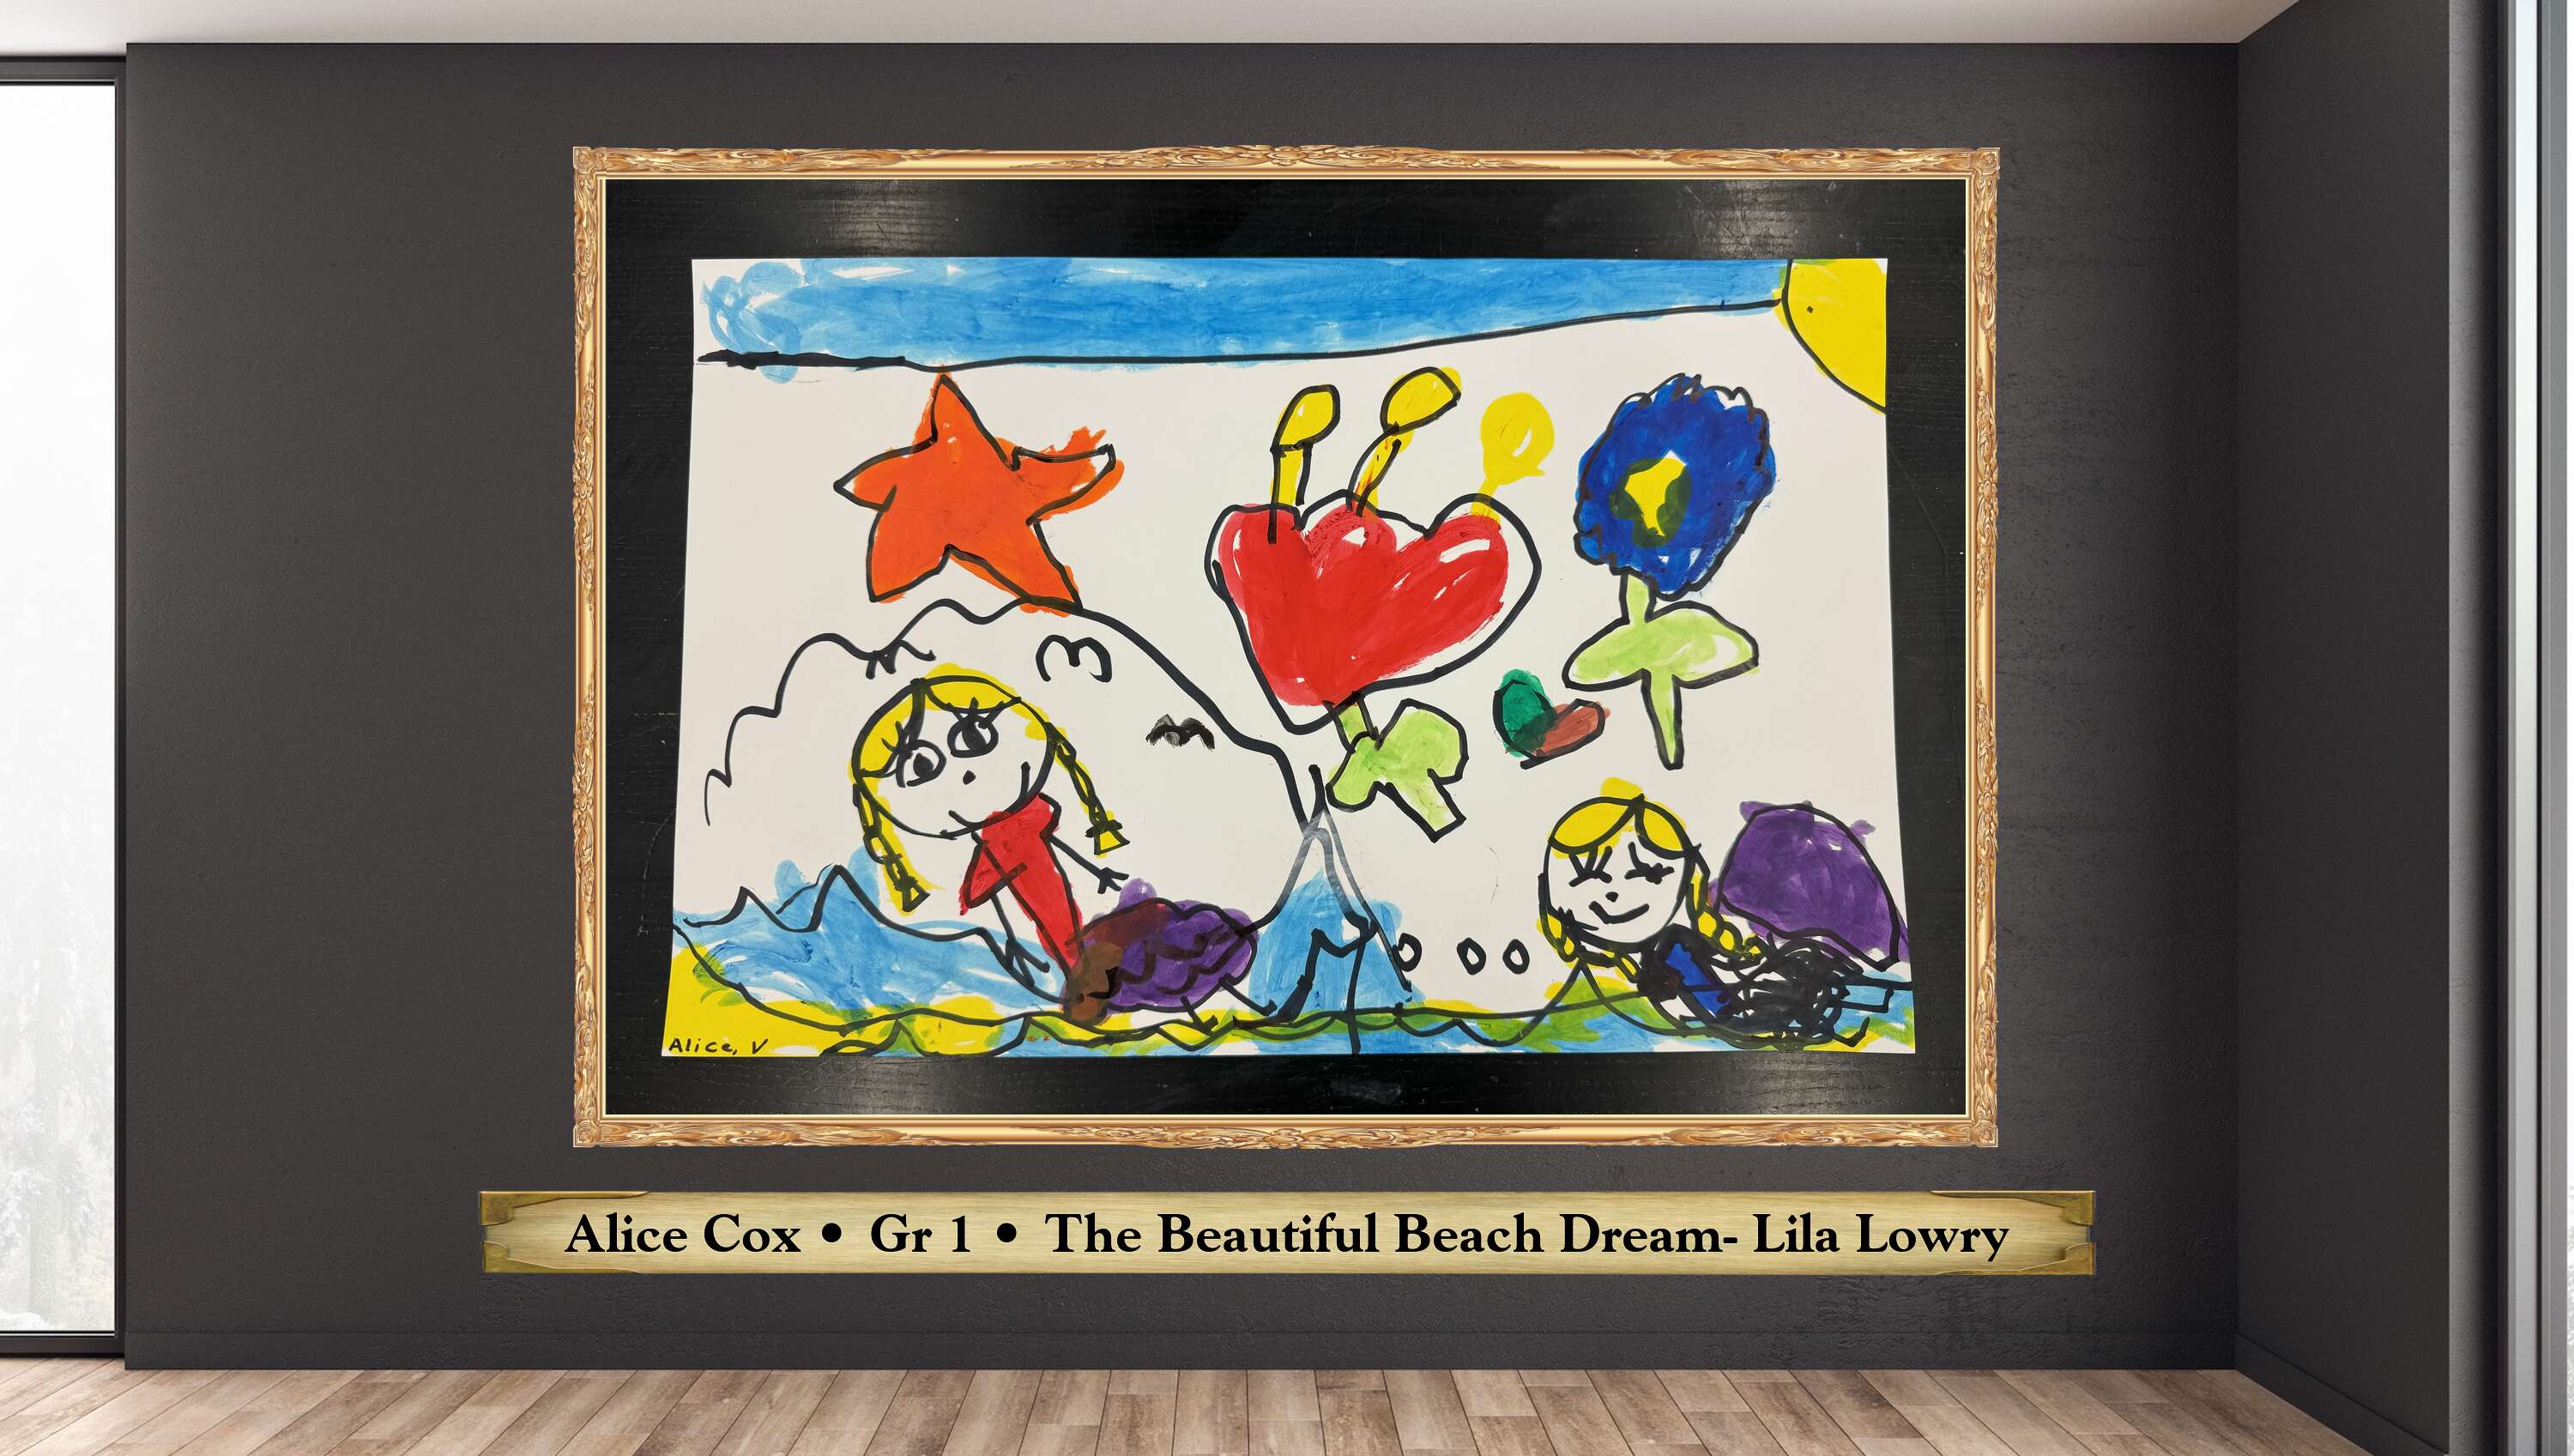 Alice Cox • Gr 1 • The Beautiful Beach Dream- Lila Lowry